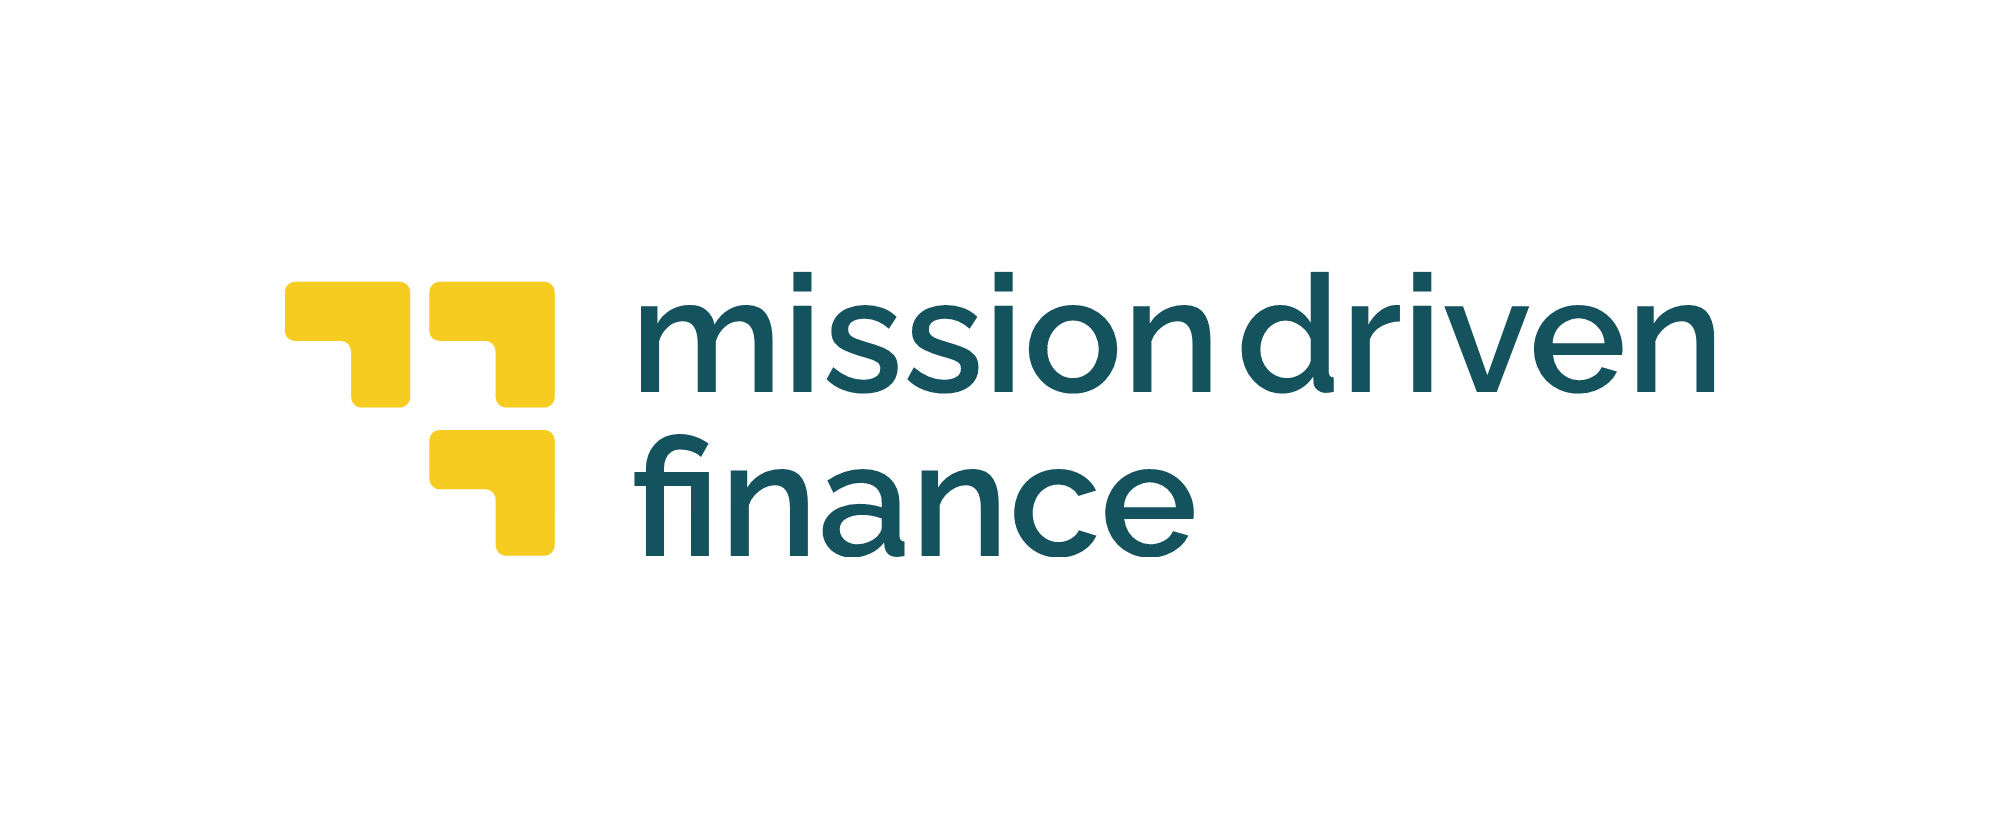 Mission Driven Finance jobs